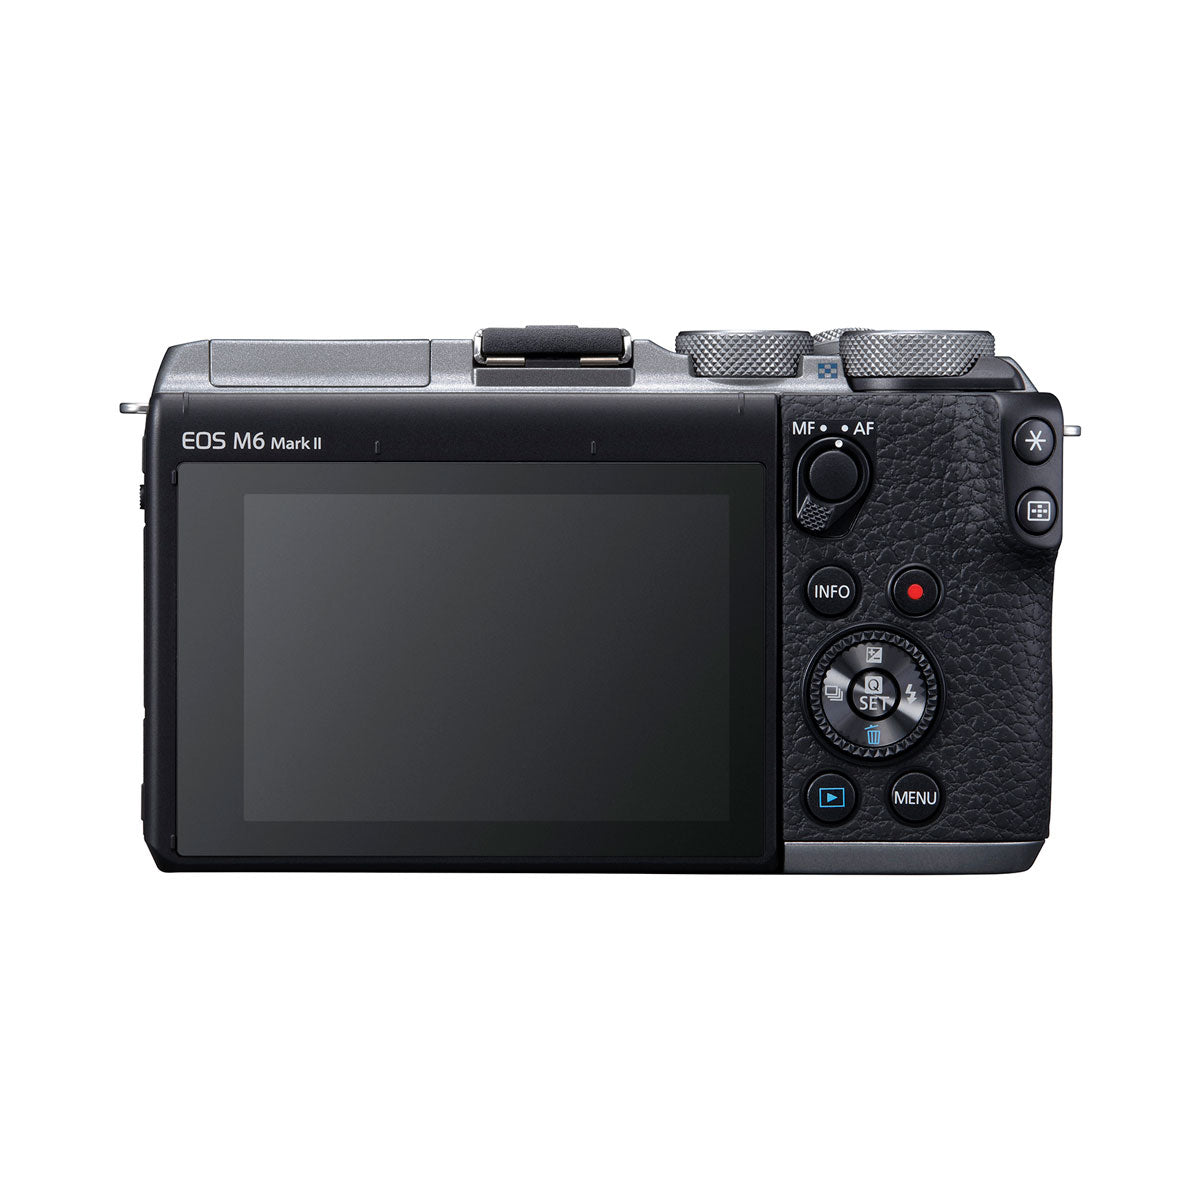 Canon EOS M6 Mark II Mirrorless Camera Body (Silver)